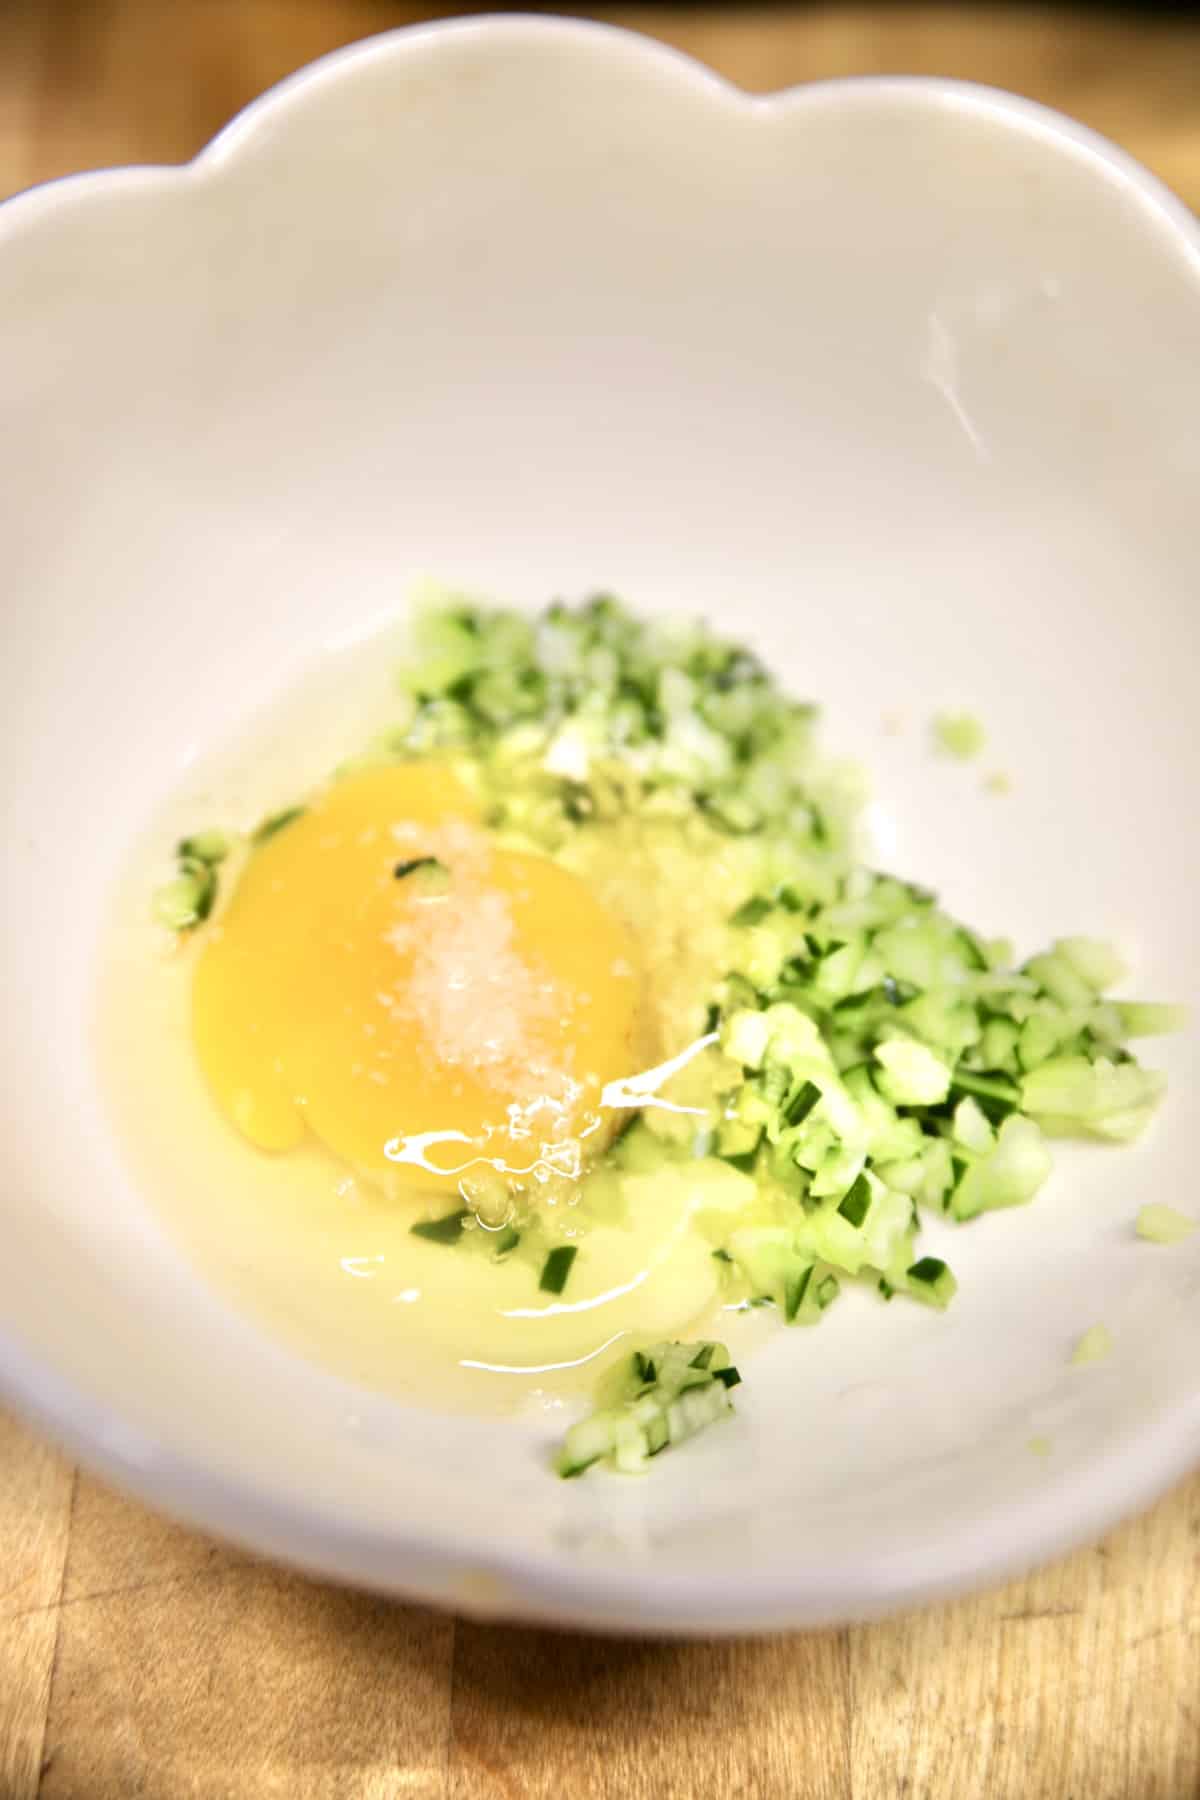 Bowl with egg, cucumber, salt, vinegar.